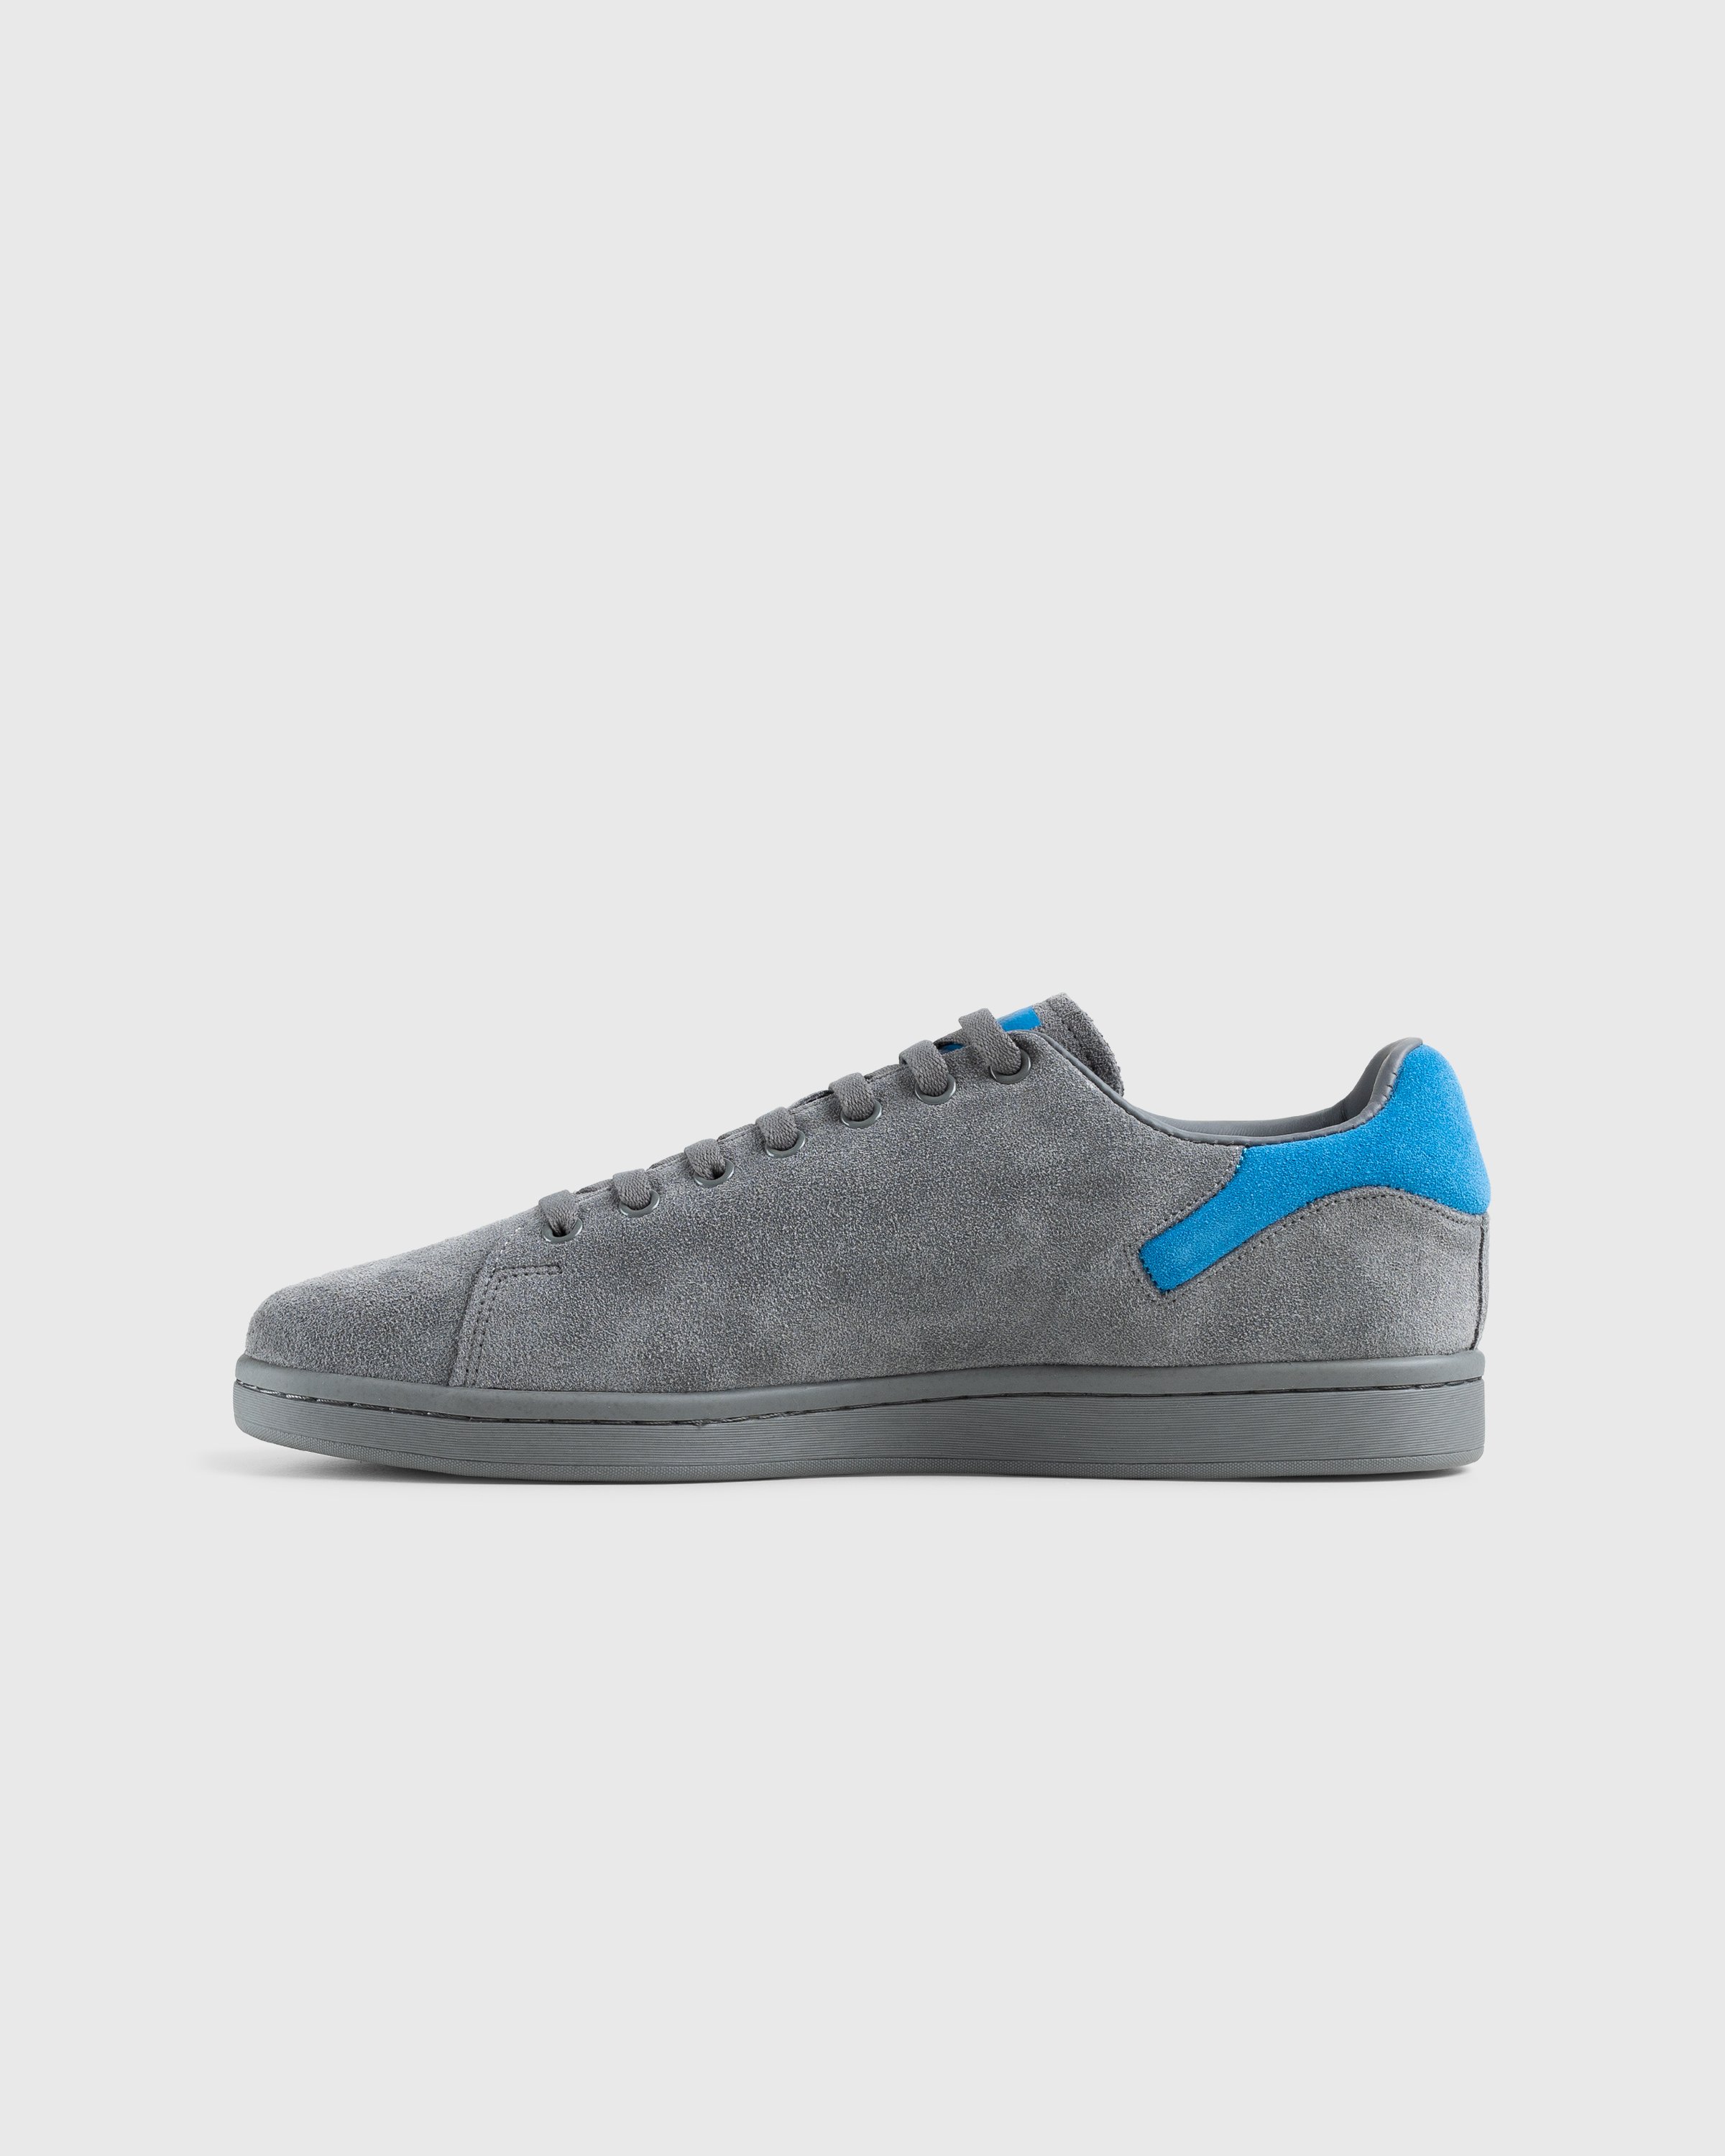 Raf Simons - Orion Grey - Footwear - Grey - Image 2